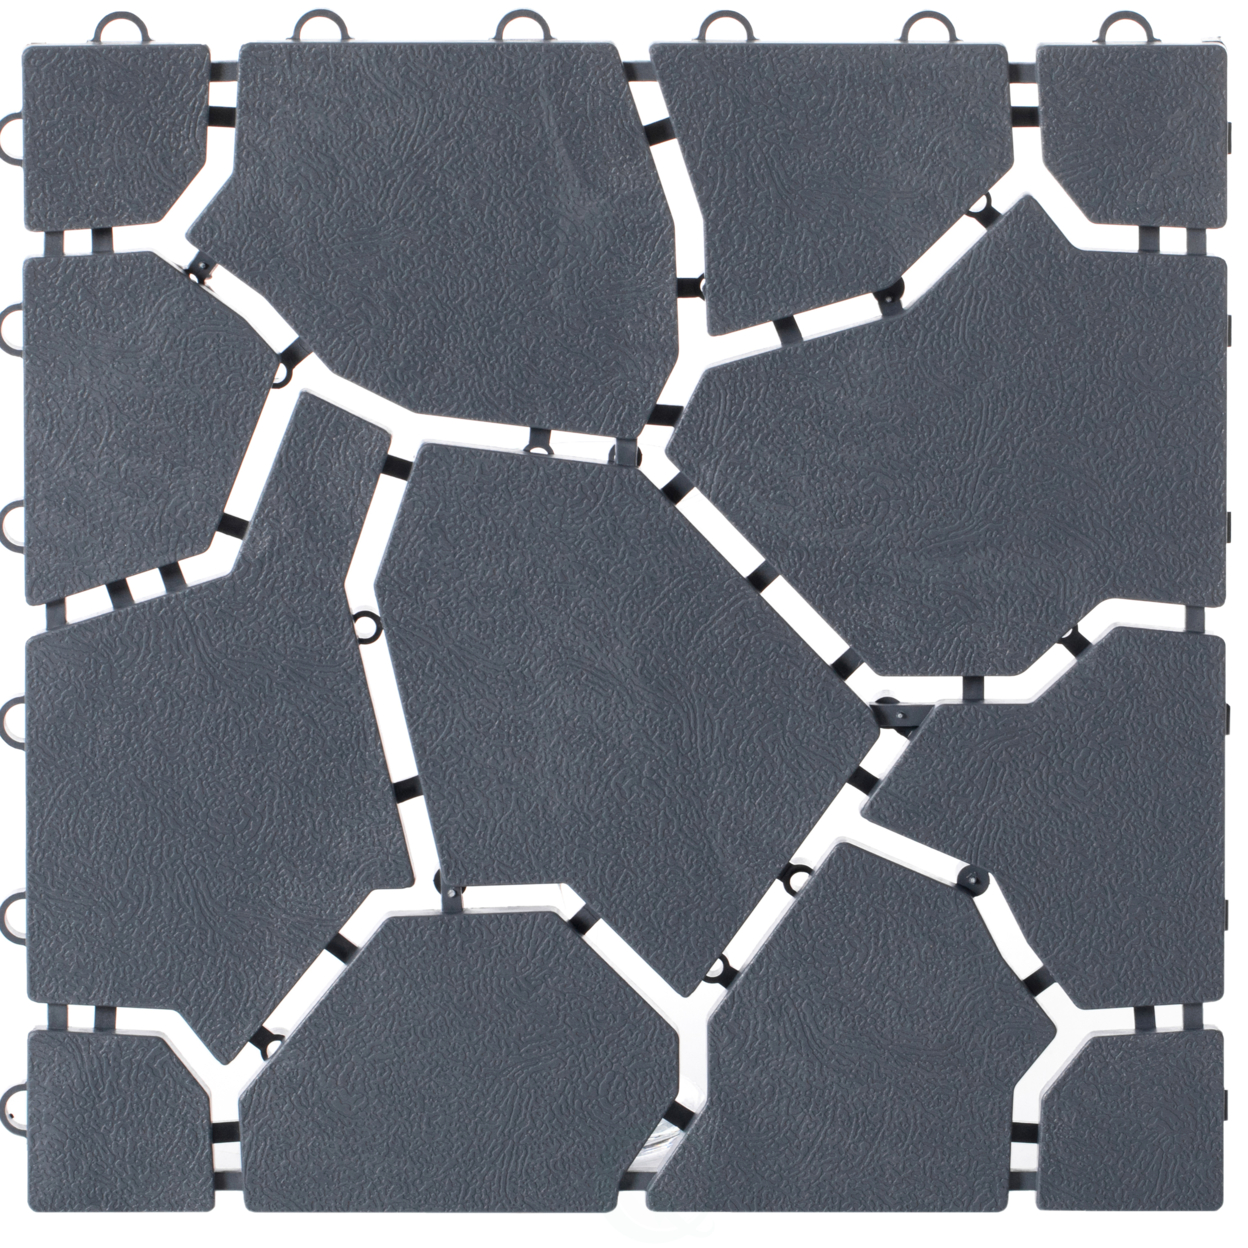 Gray Garden Path Track Interlocking Stone Look Design Pathway Tile Floor Paver, Pack Of 4